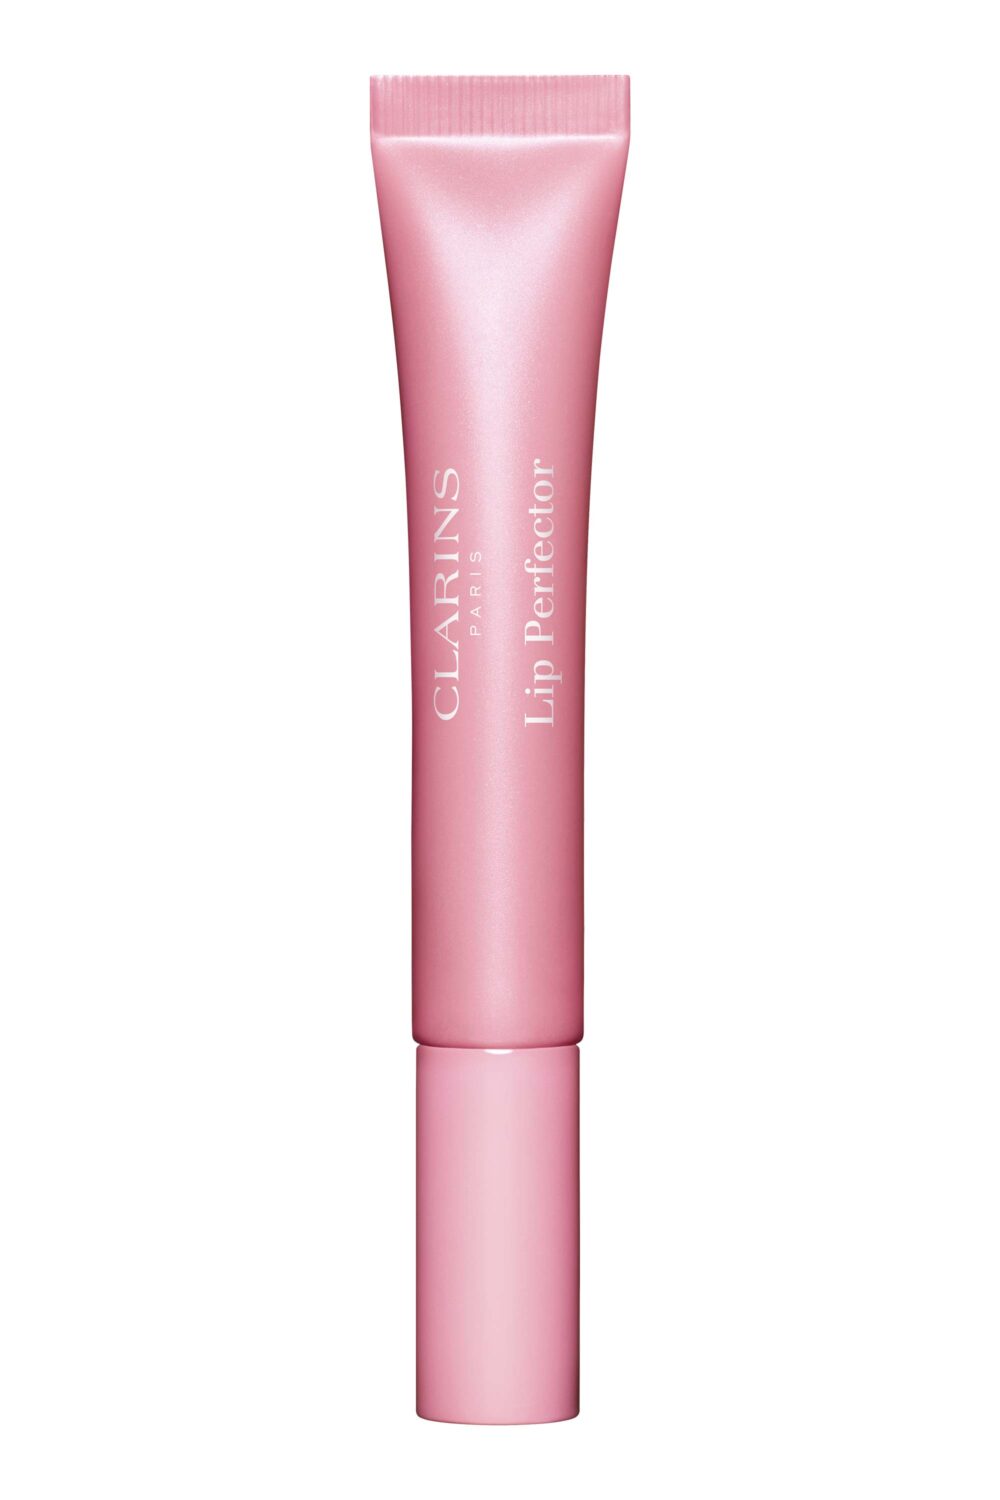 Clarins - Embellisseur lèvres et joues Glow Gloss 21 Soft Pink Glow